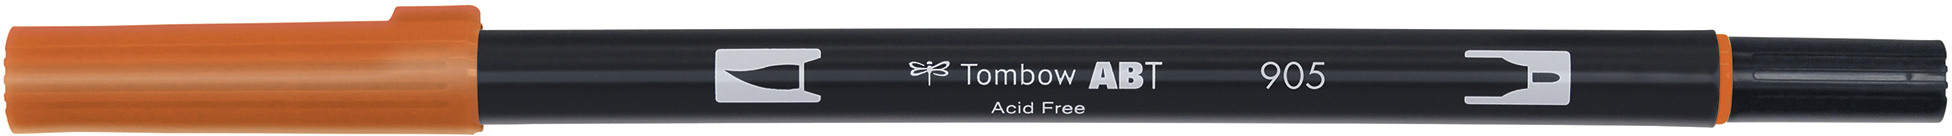 TOMBOW Dual Brush Pen ABT 905 rouge